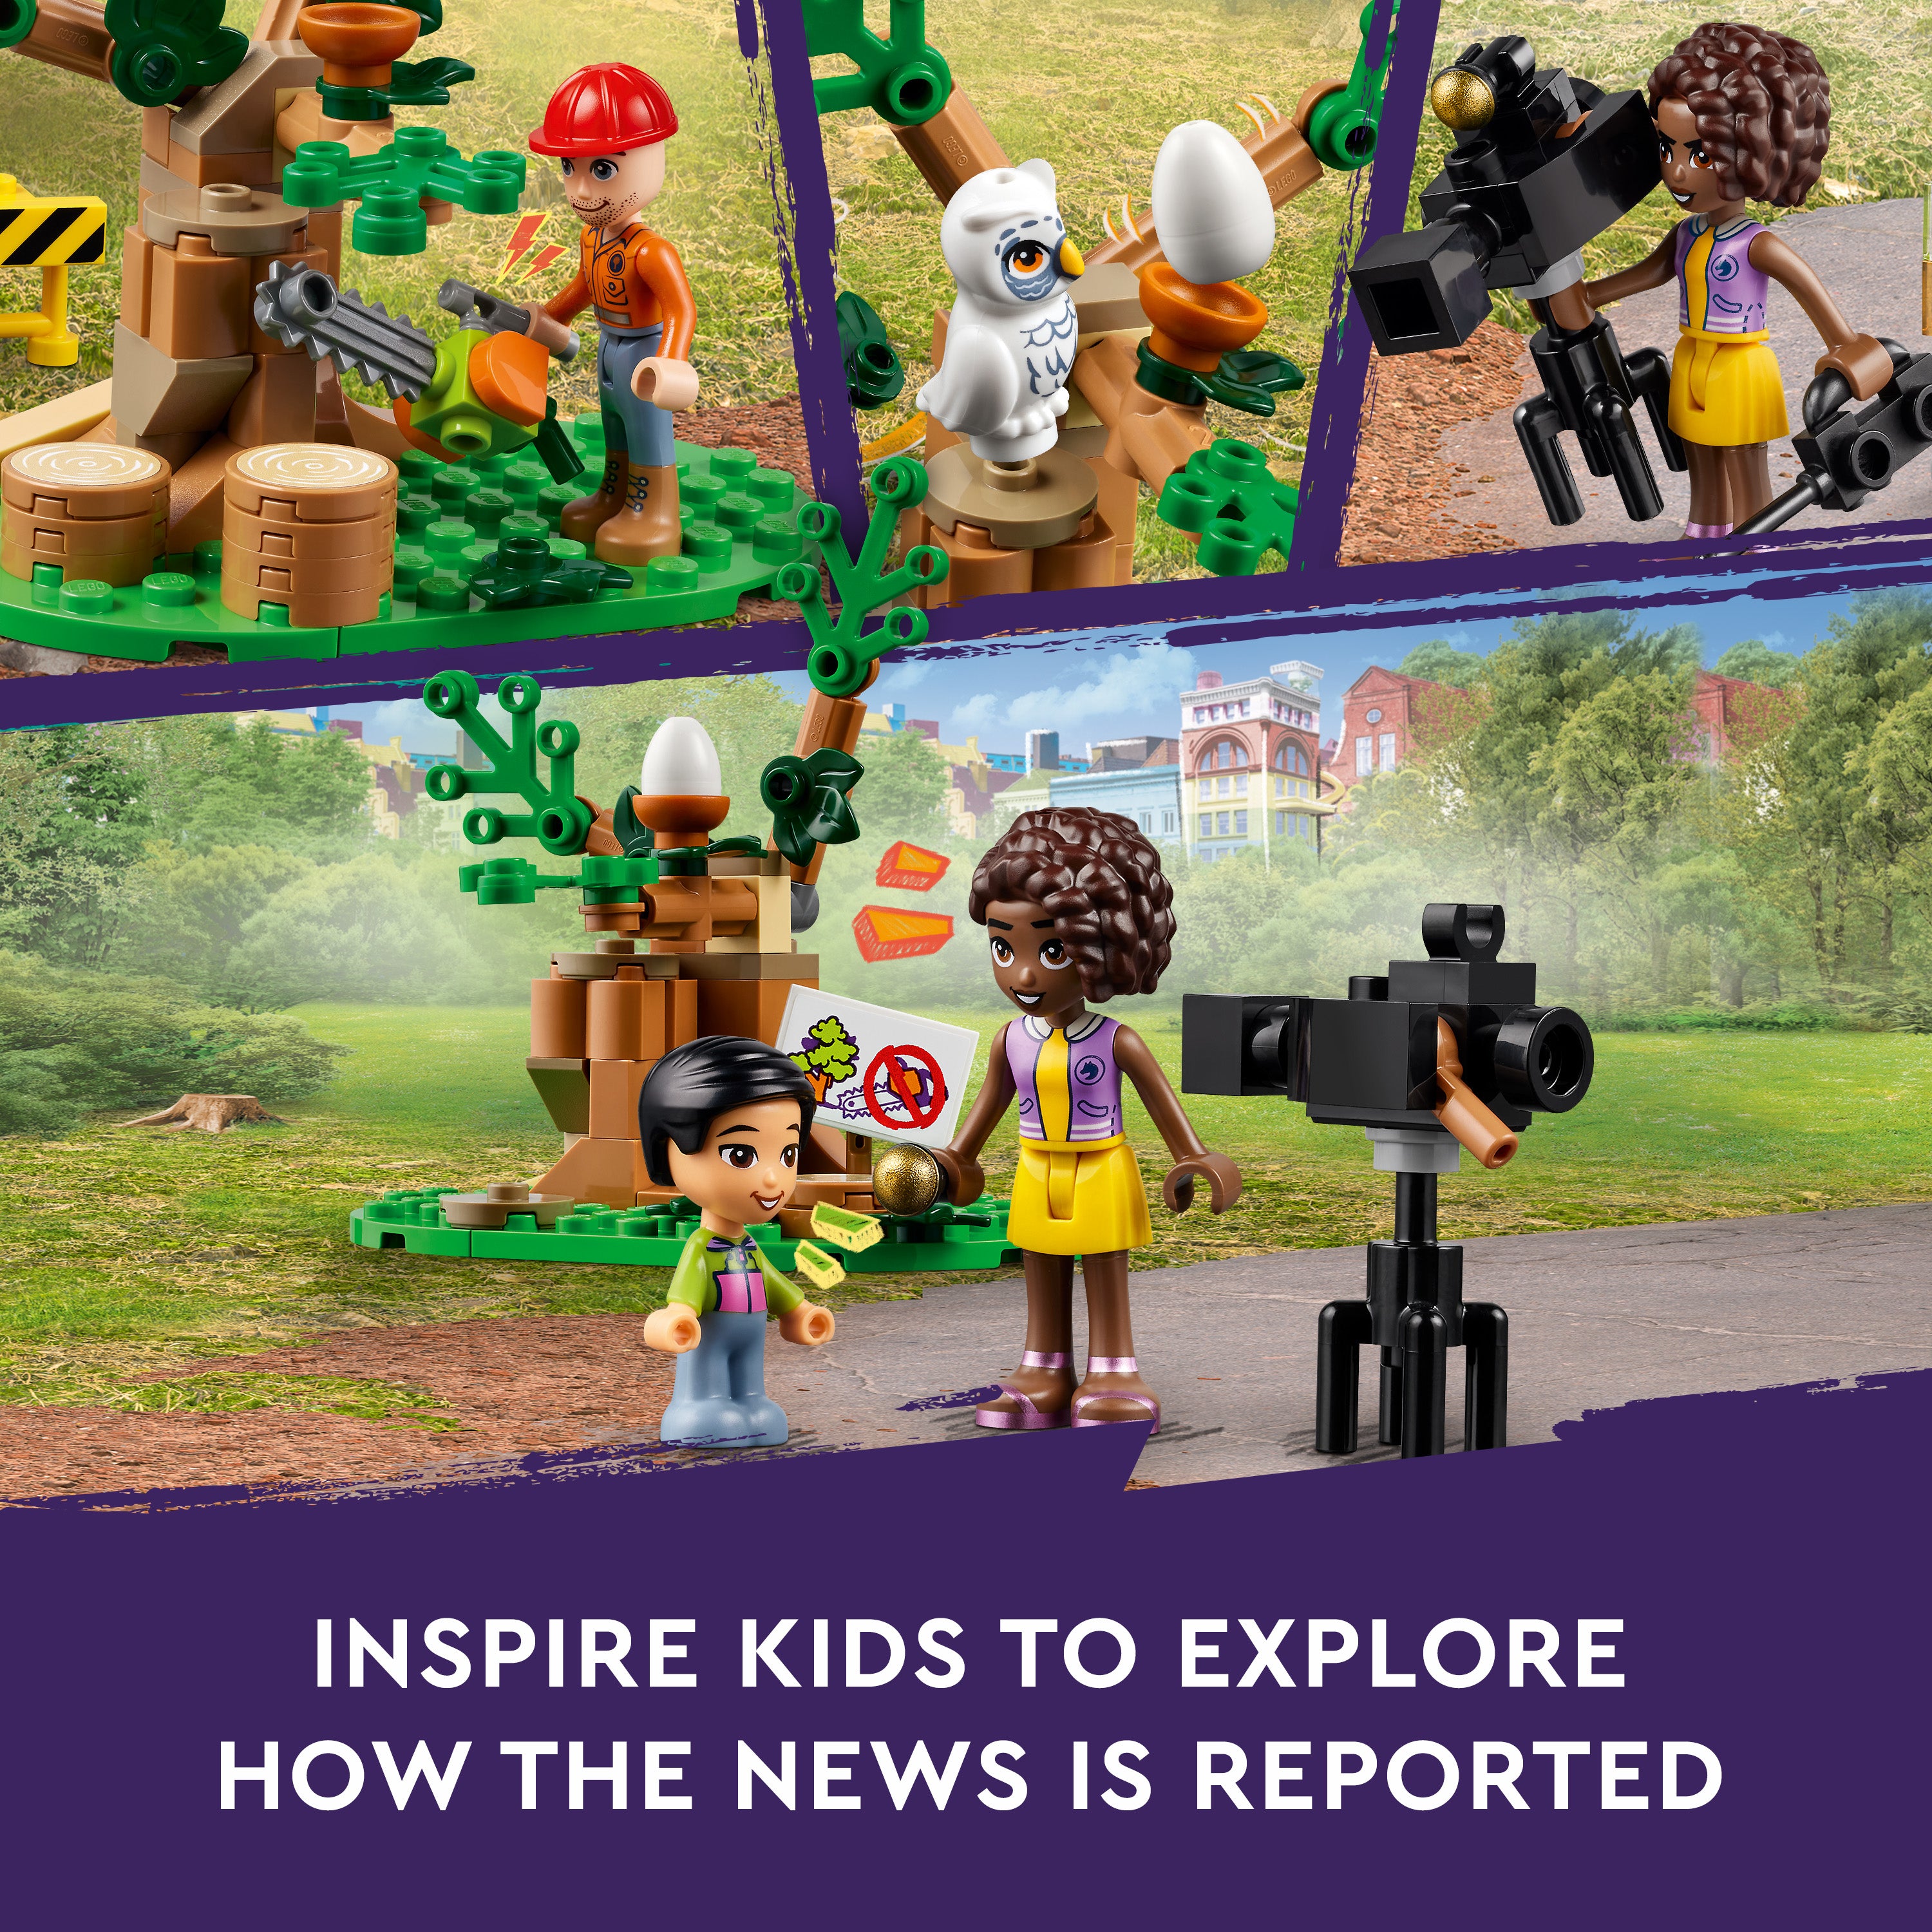 Lego 41749 Newsroom Van